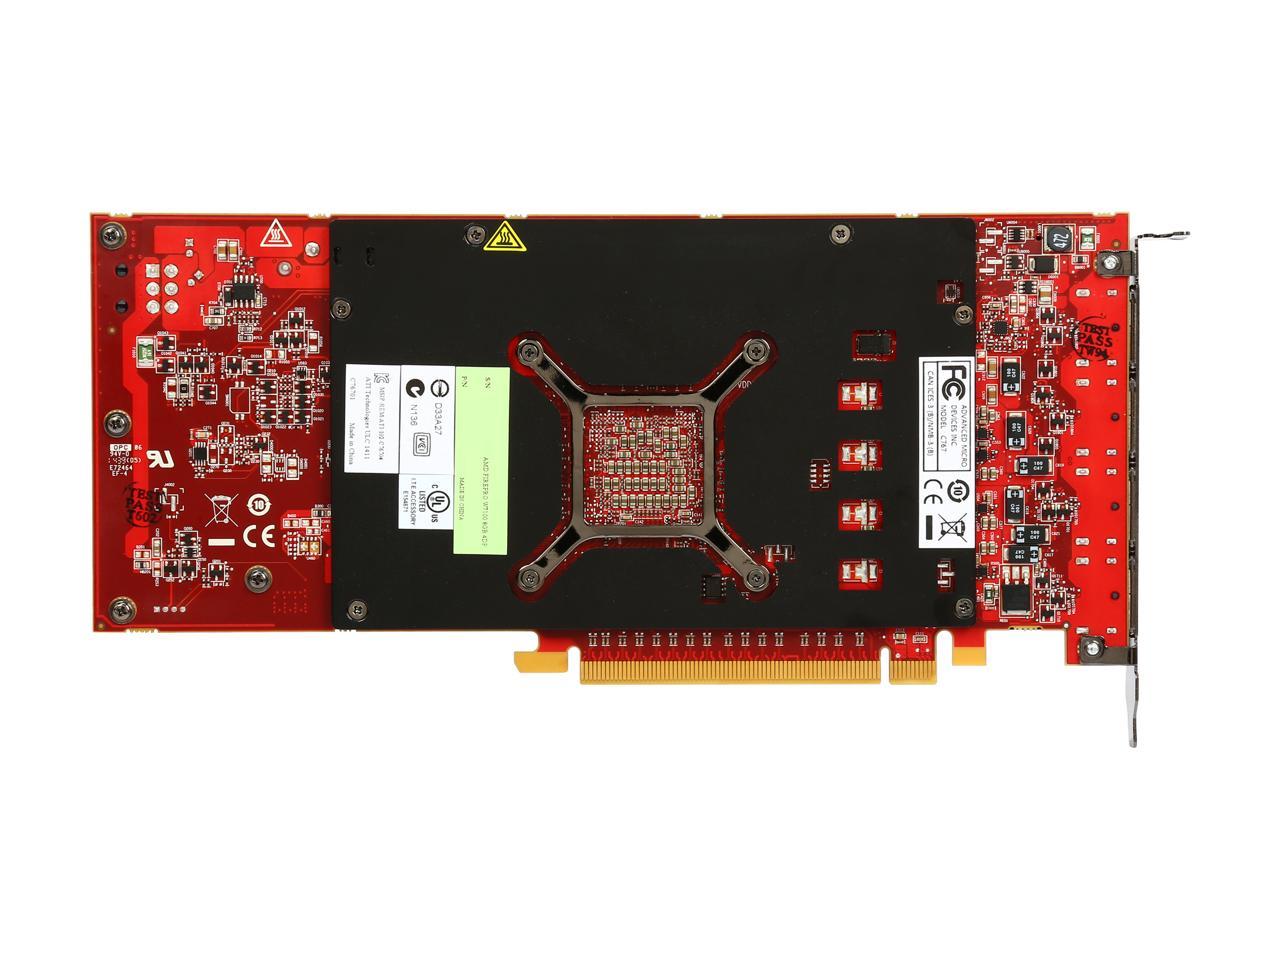 Amd Firepro W7100 100-505724 8Gb 256-Bit Gddr5 Pci Express 3.0 X16 Full Height/Full Length Single-Slot Workstation Video Card